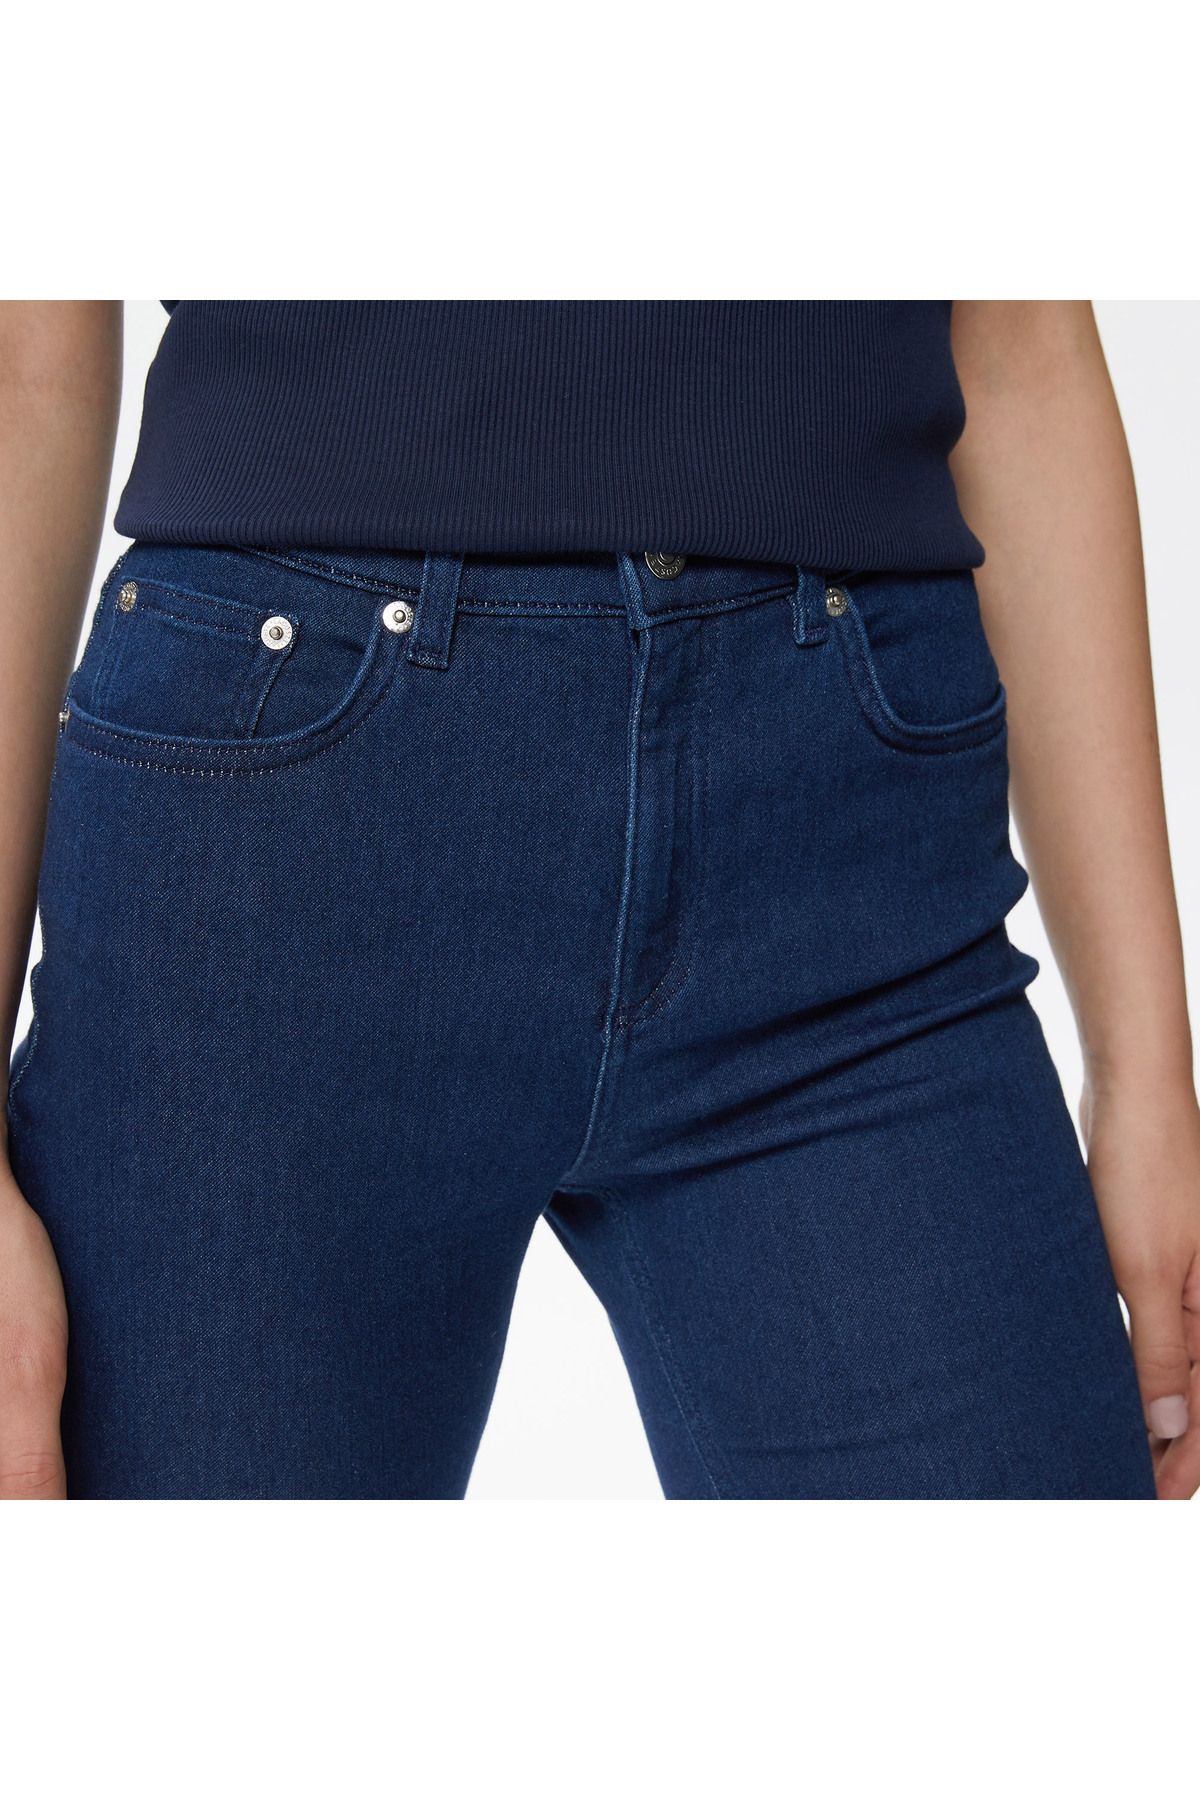 Lacoste شلوار جین مناسب زنانه